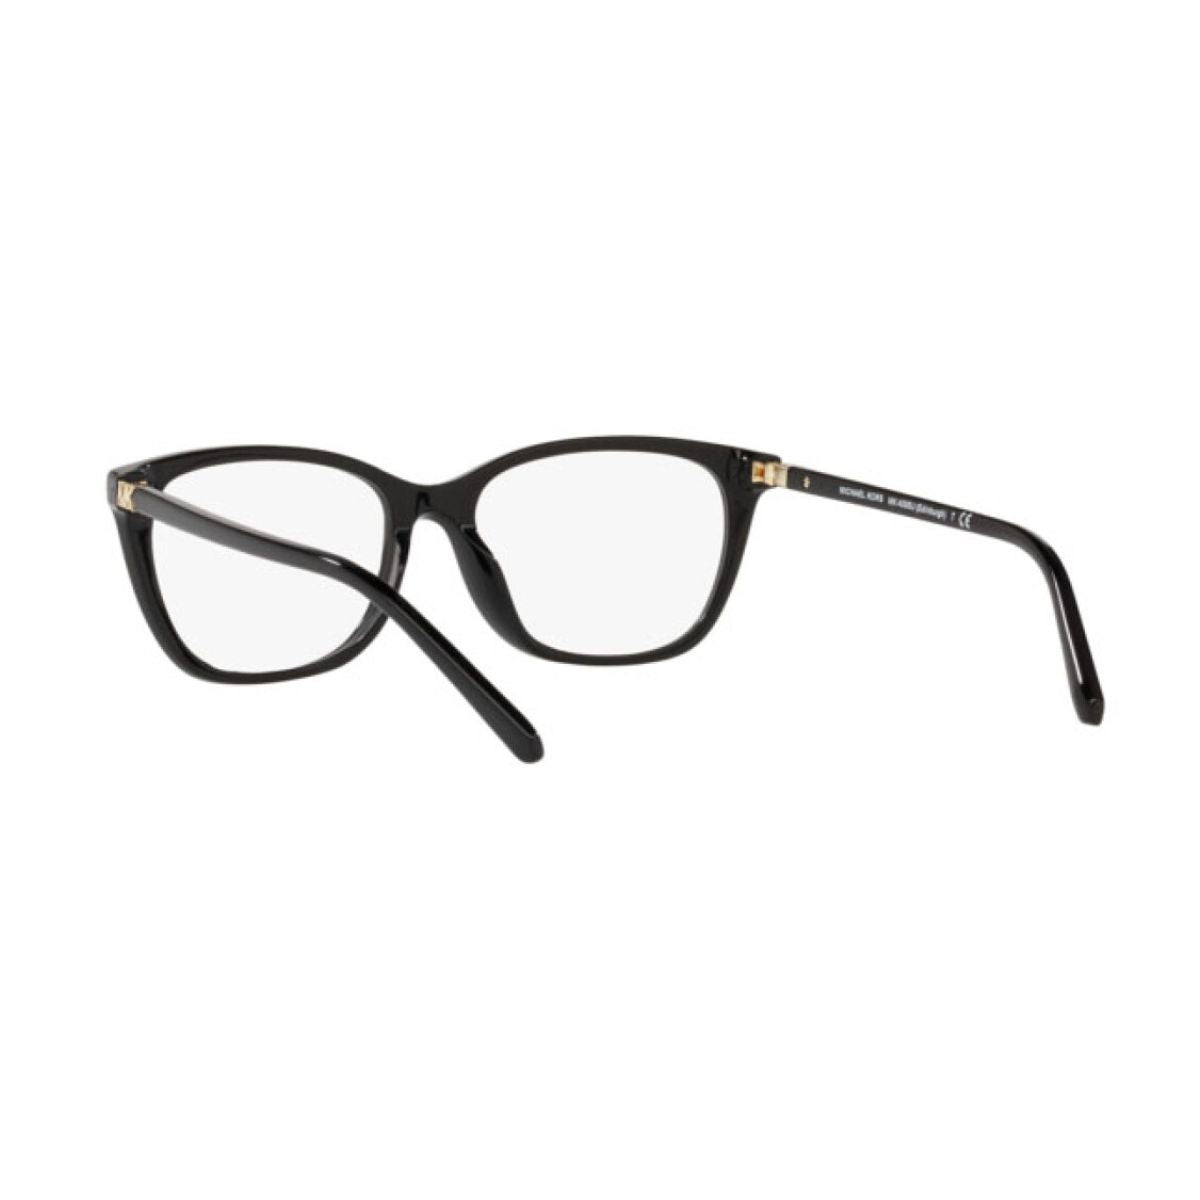 "Michael Kors 4085U 3005 cateye glasses frame for women's online at optorium"